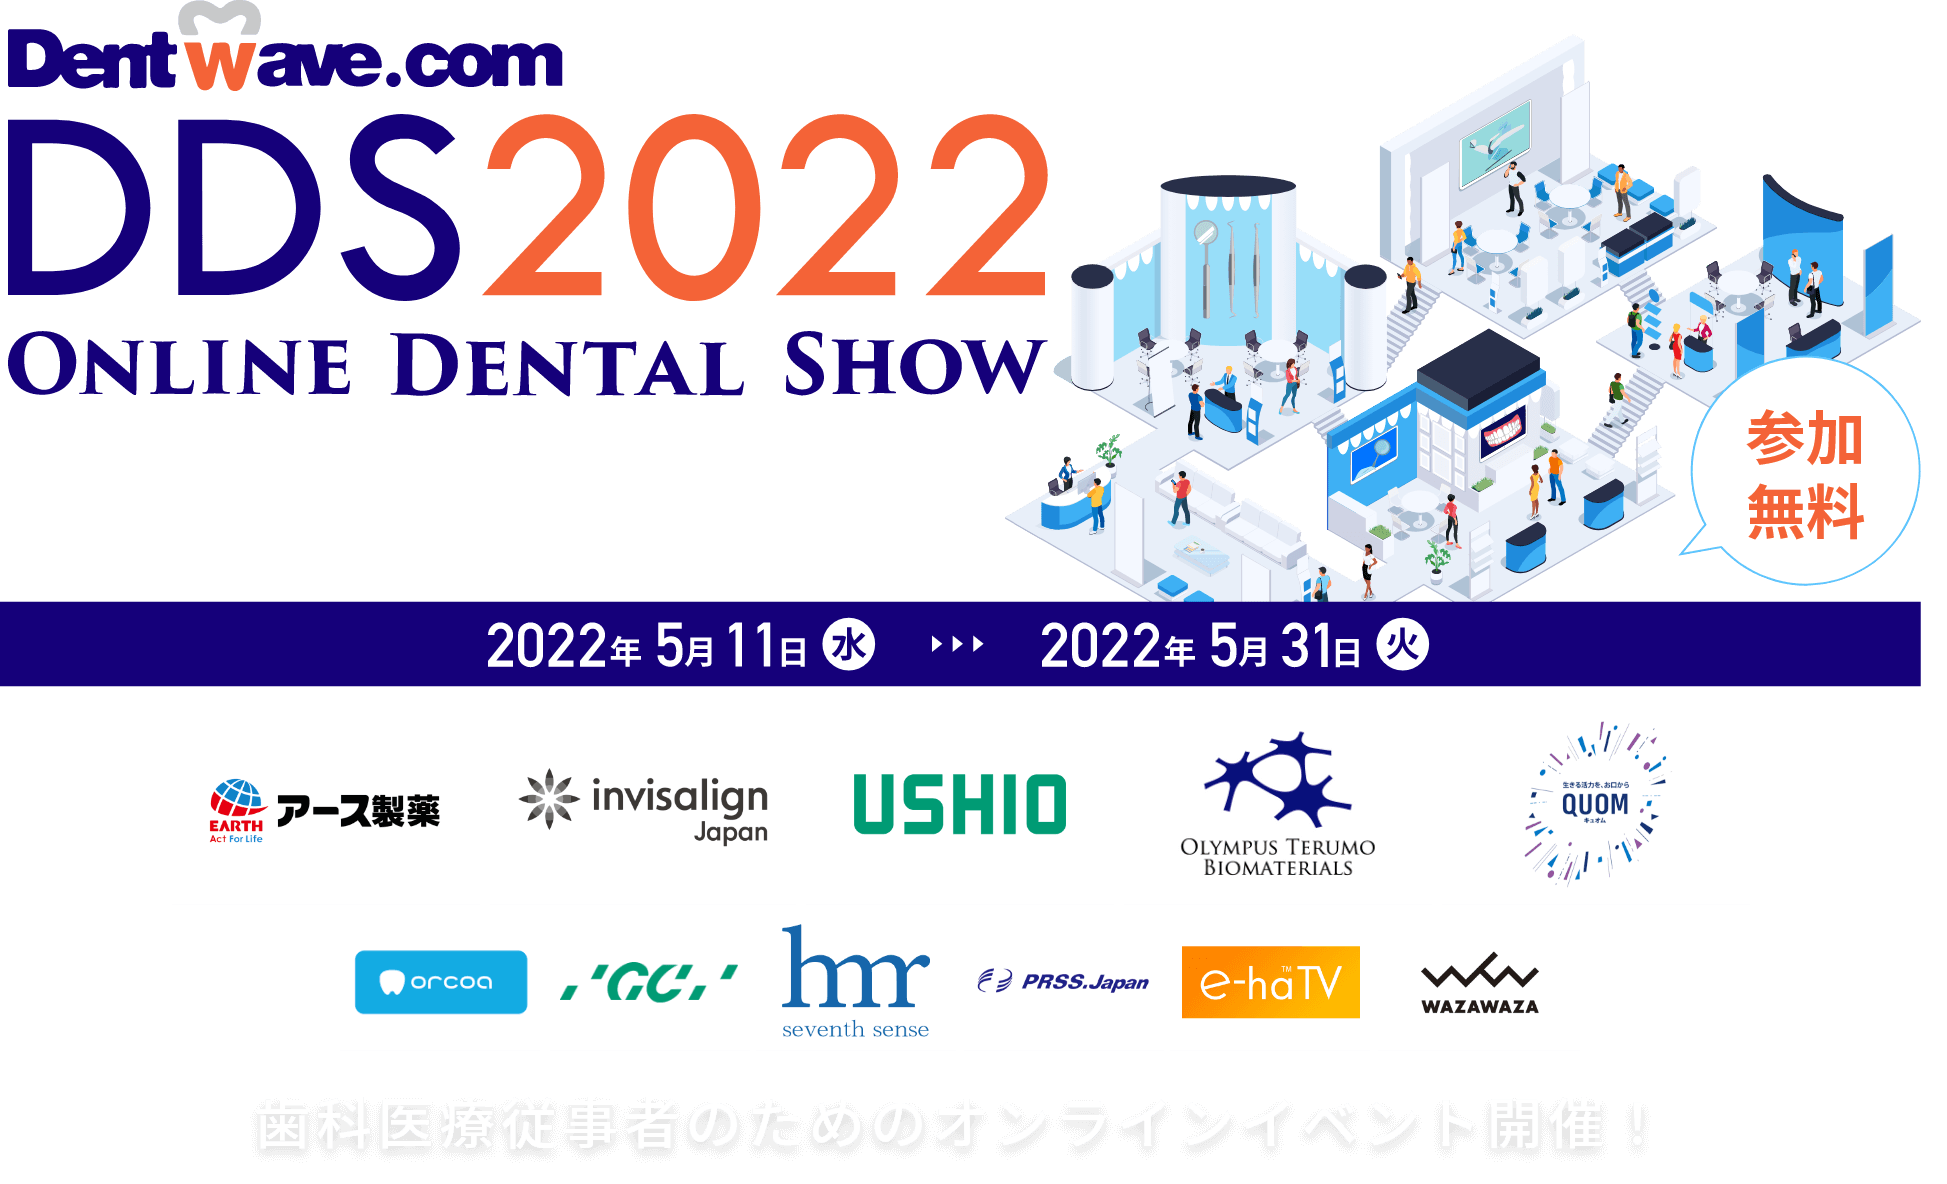 DDS2022 Online Dental Show 歯科医療従事者のためのオンラインイベント